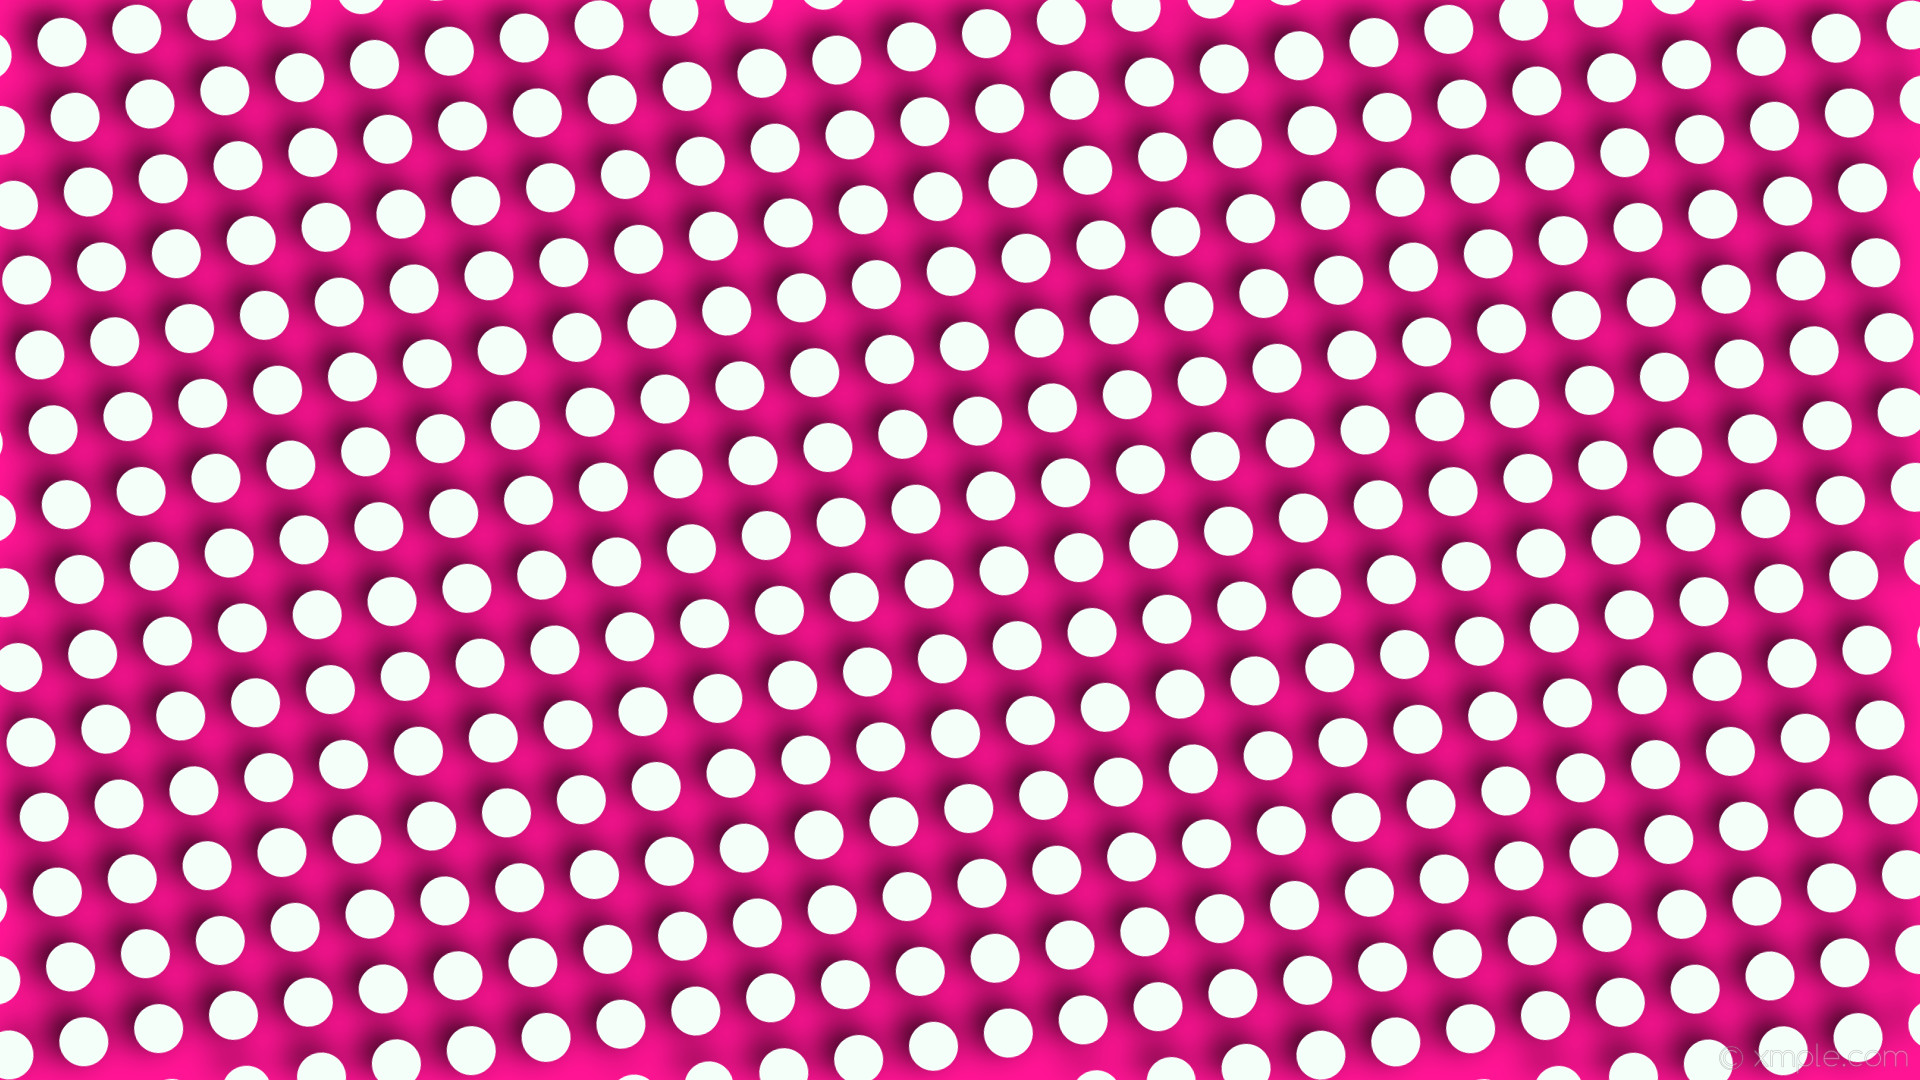 1920x1080 wallpaper drop shadow pink polka dots white deep pink mint cream #ff1493  #f5fffa 10